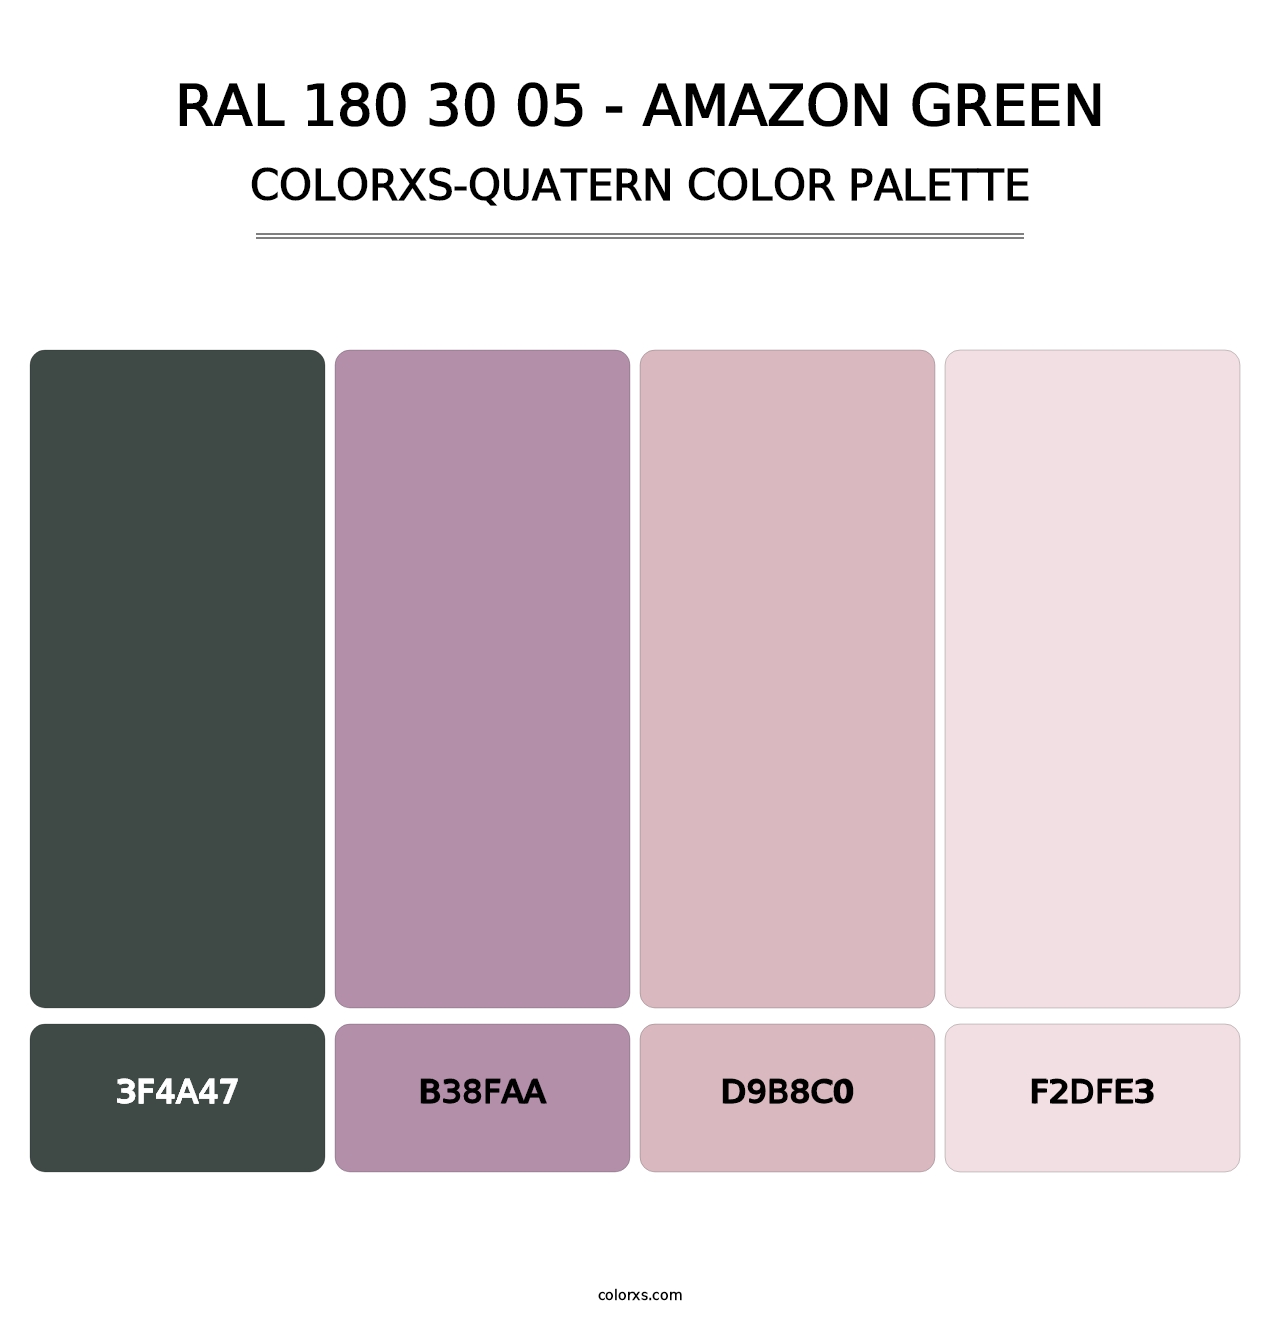 RAL 180 30 05 - Amazon Green - Colorxs Quatern Palette